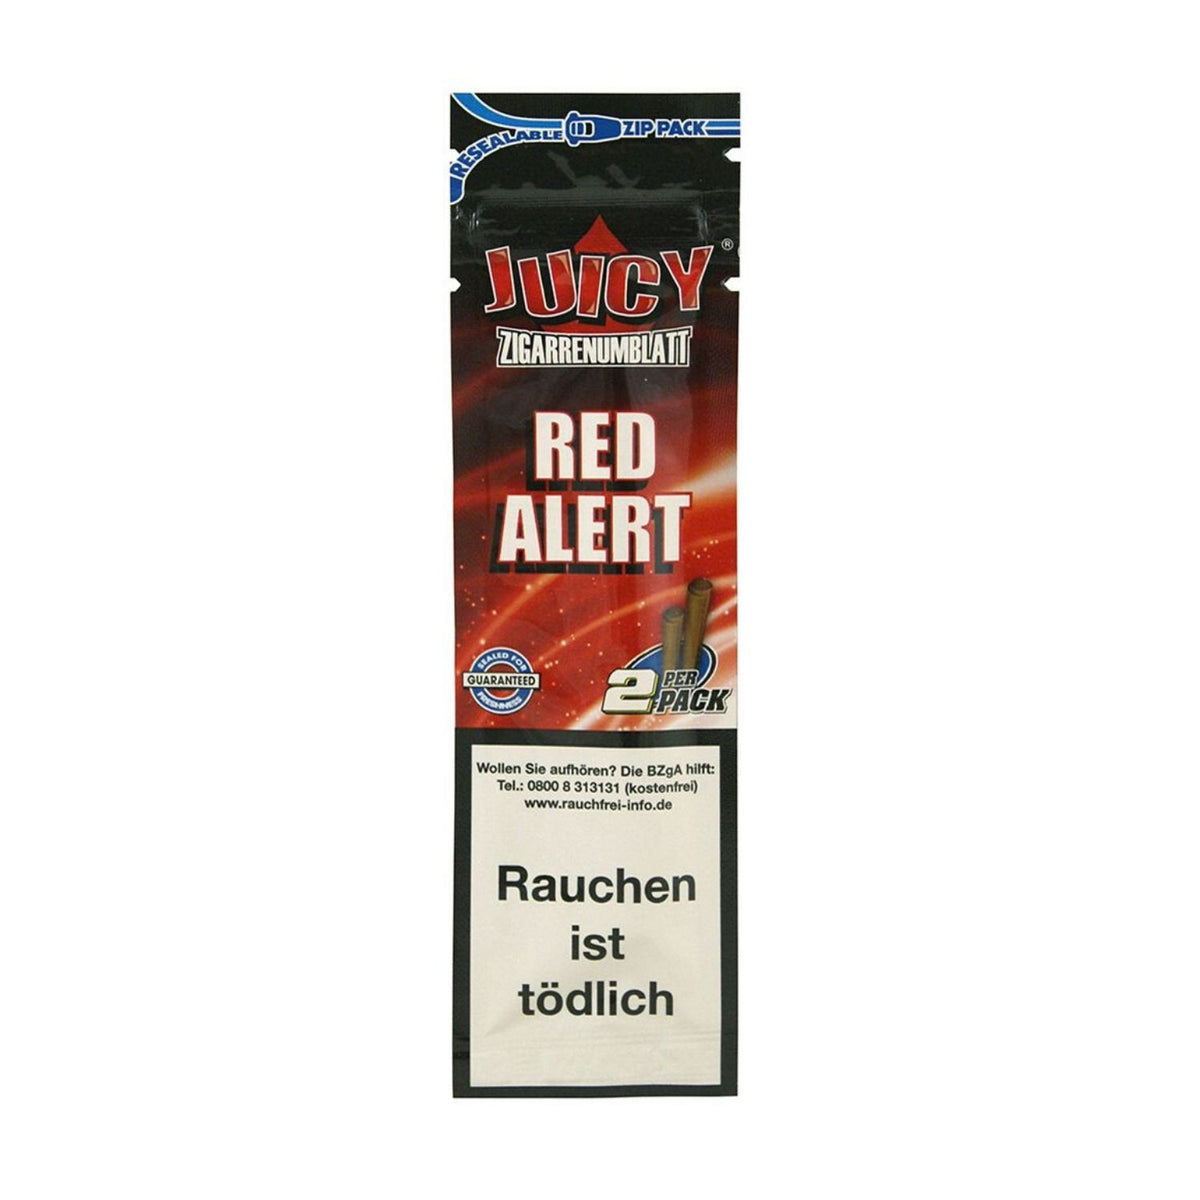 Juicy Double Wraps Blunt - Red Alert Flavour